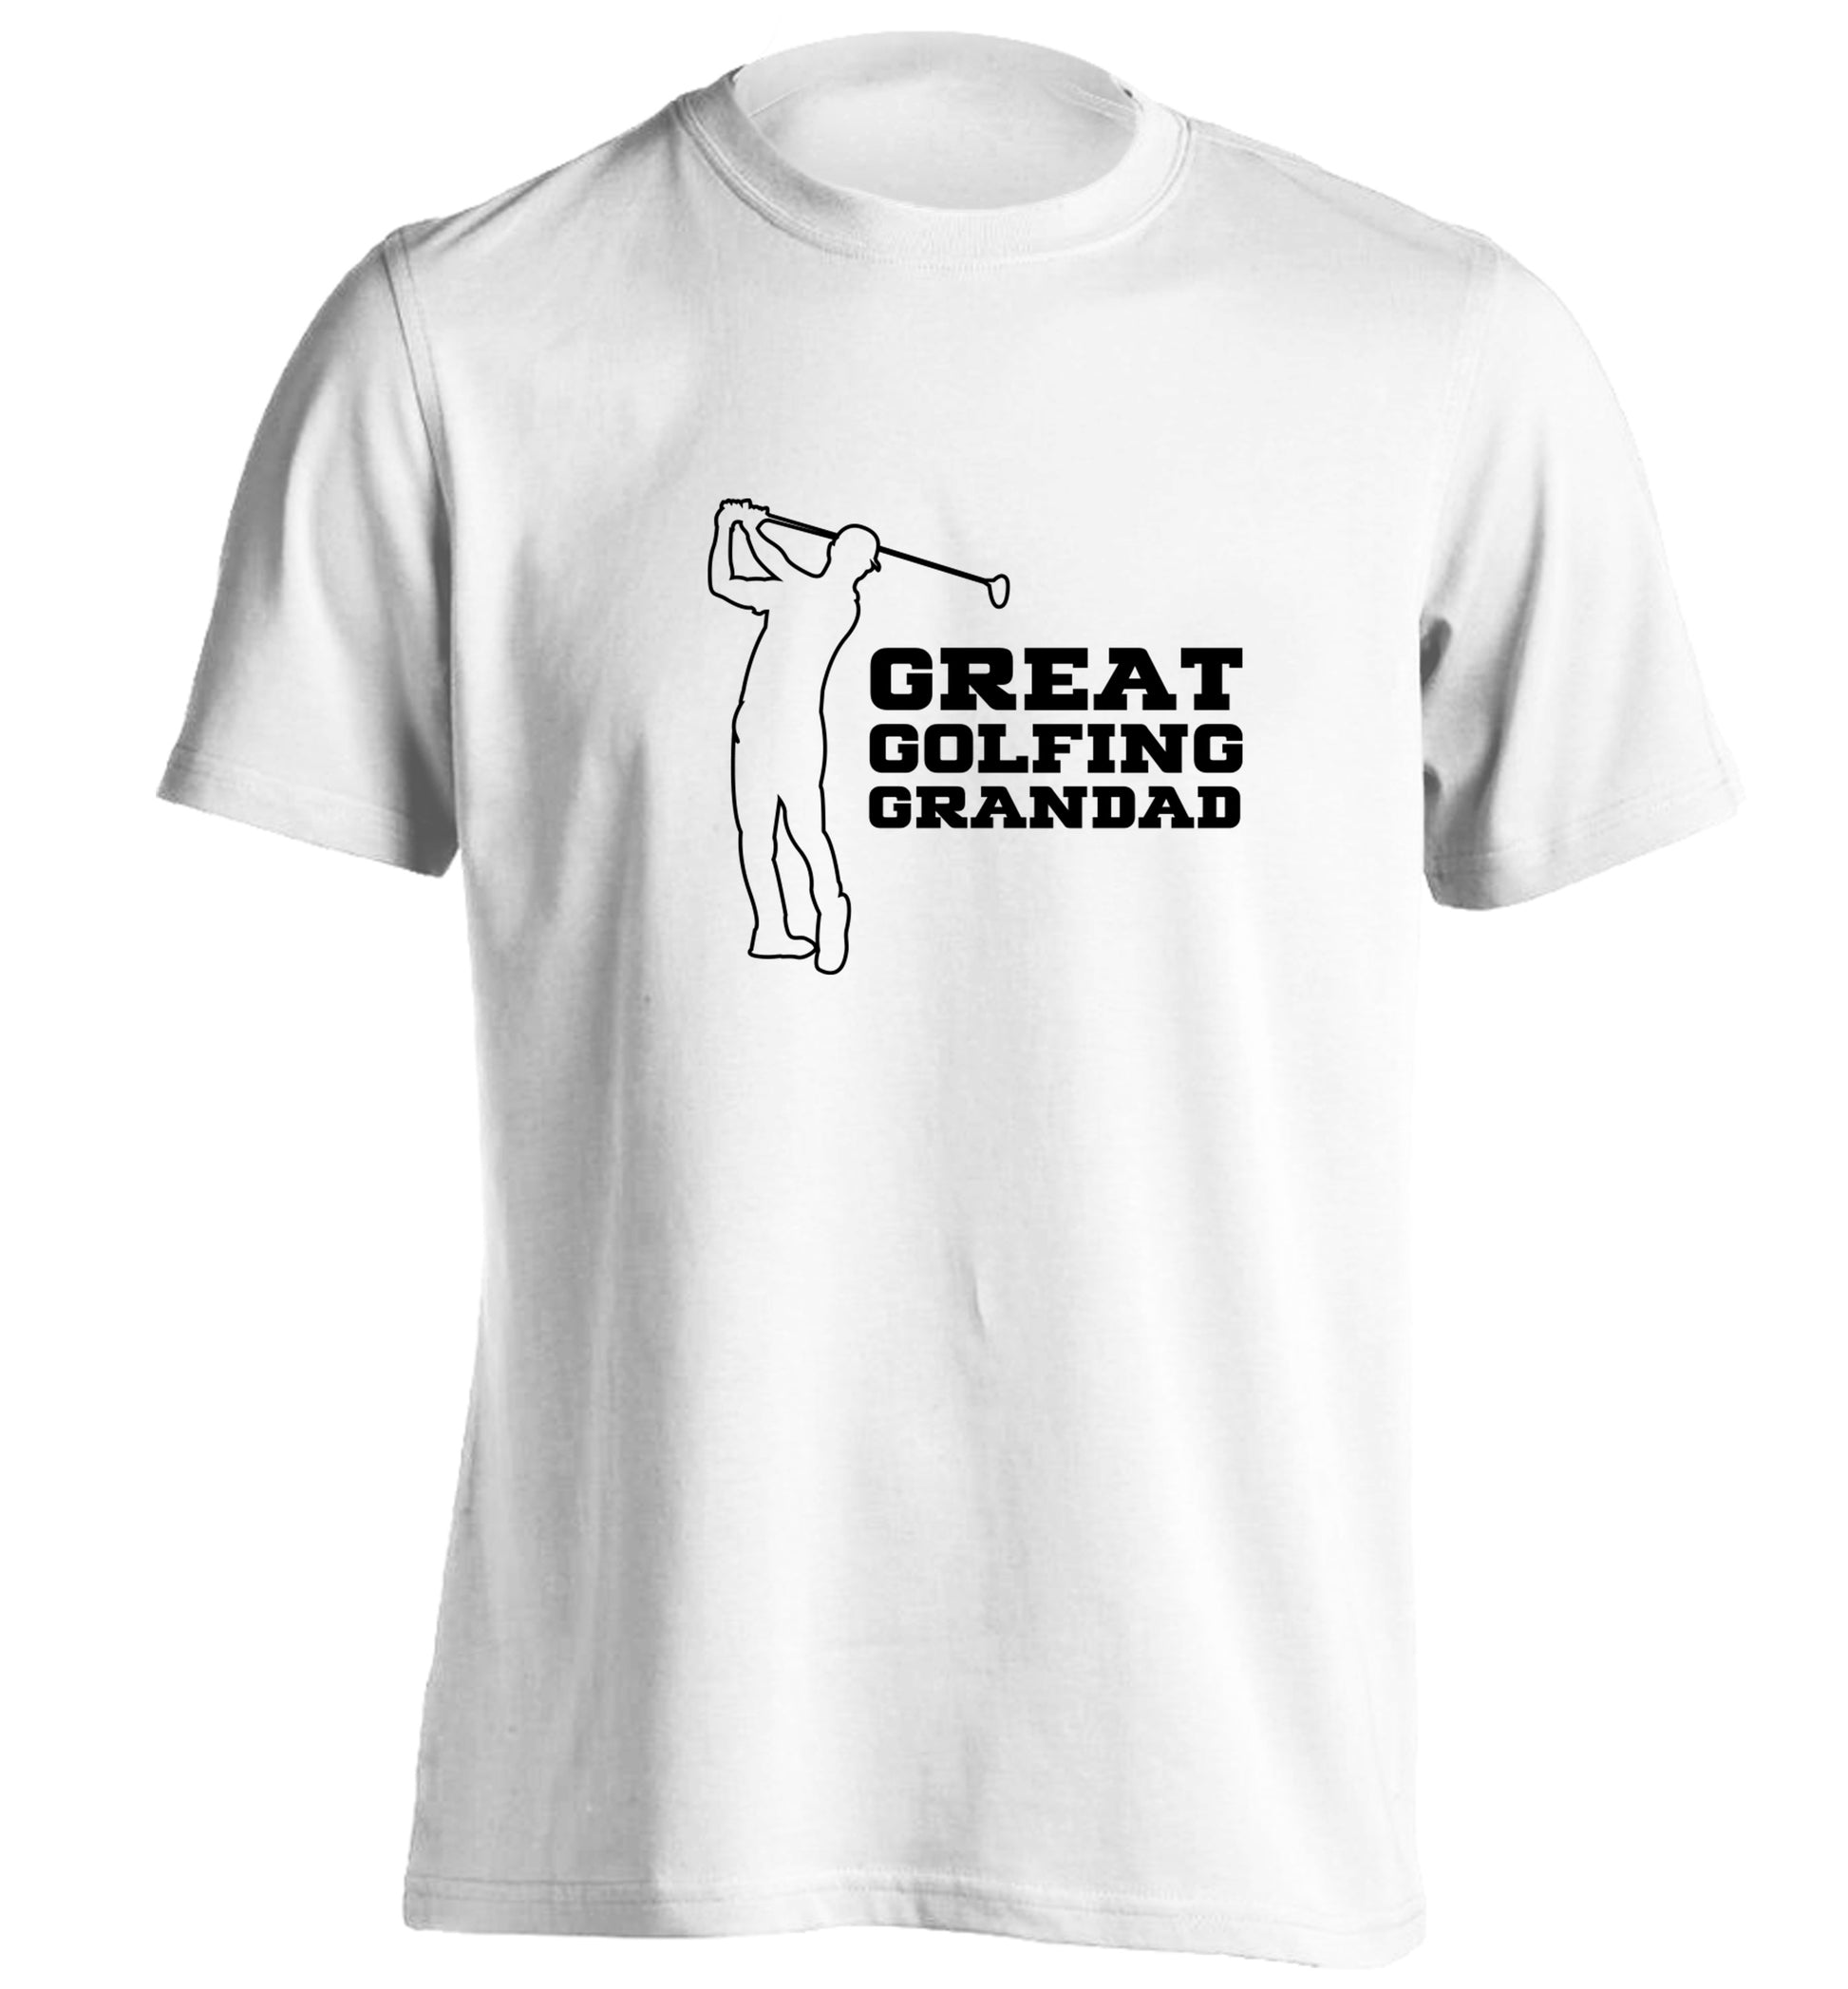 Great Golfing Grandad adults unisex white Tshirt 2XL